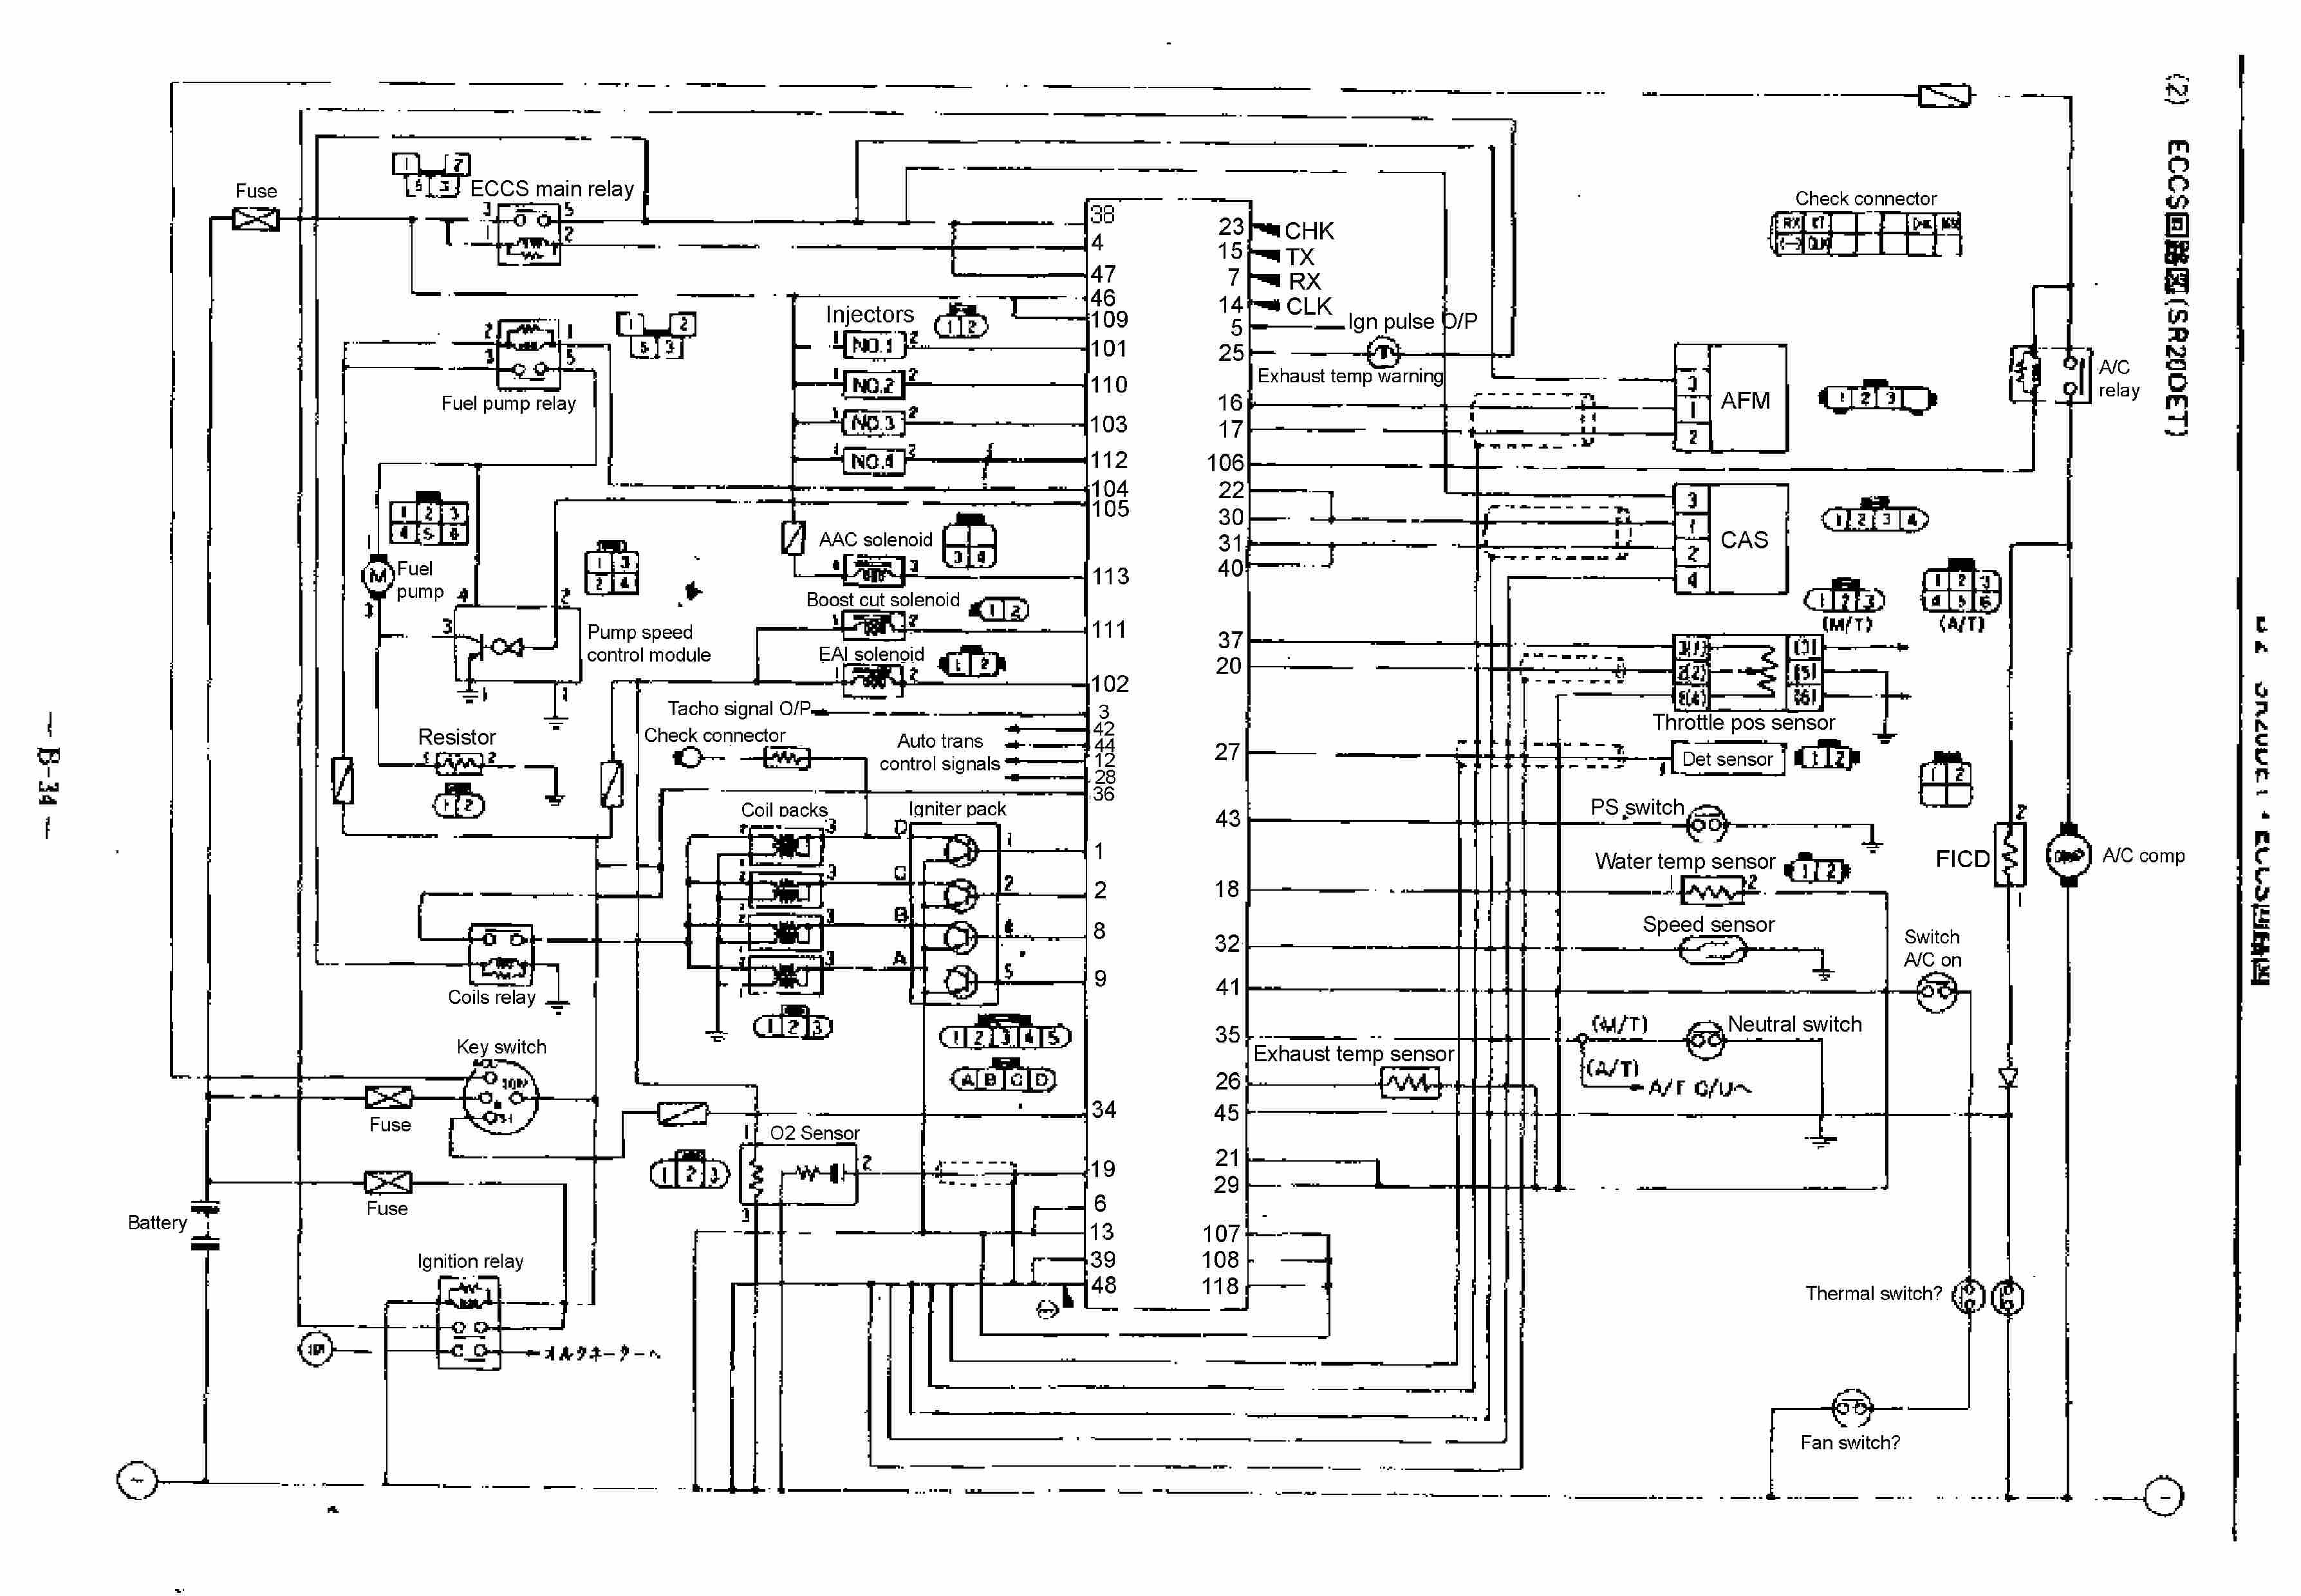 NISSAN - Car Manual PDF, Wiring Diagram & Fault Codes DTC